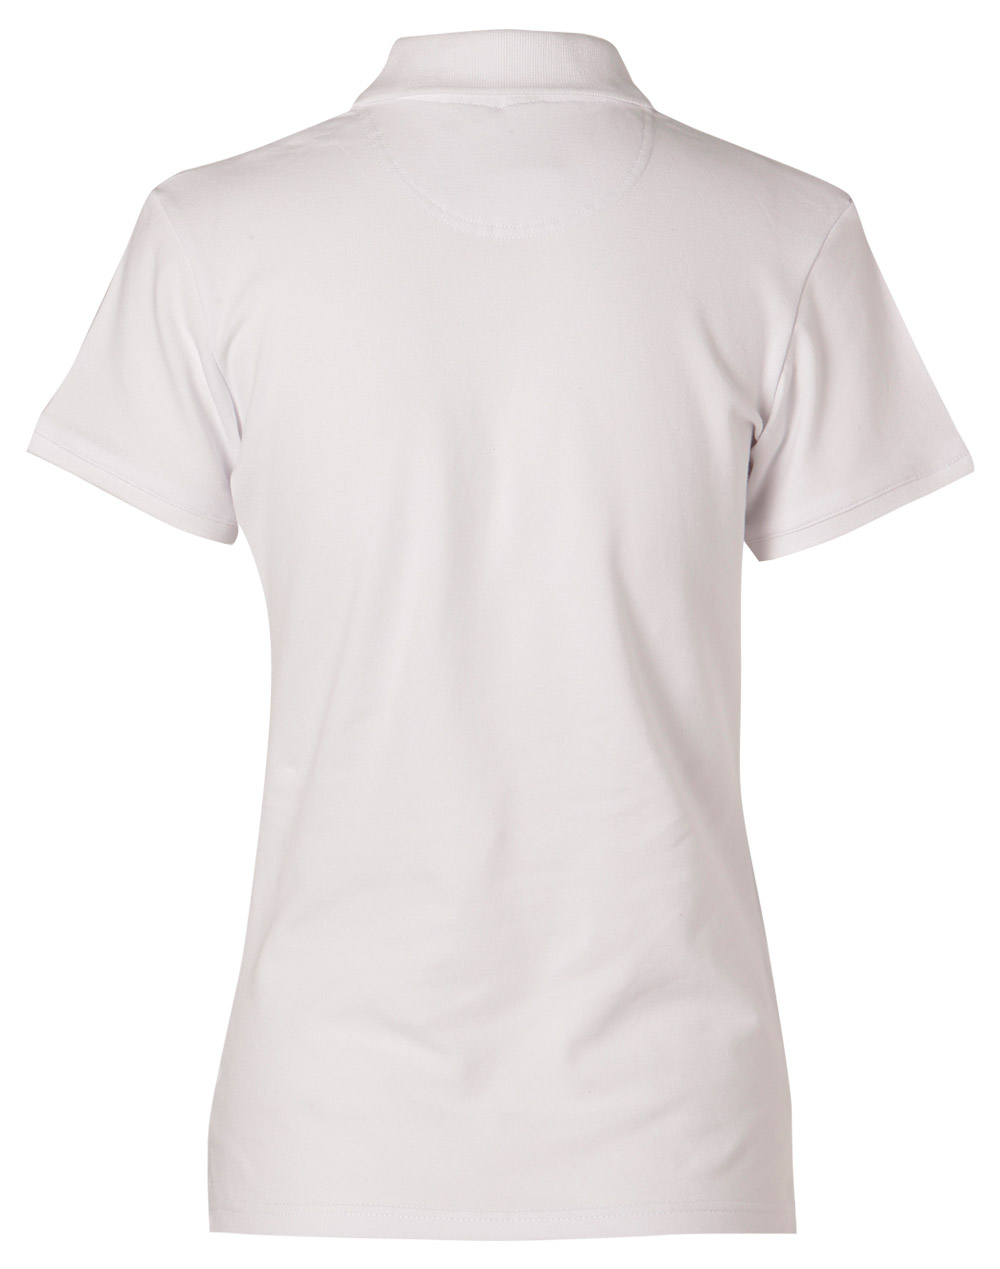 Custom Cotton (White) Long Beach Ledies Polo Shirts Online Perth Australia